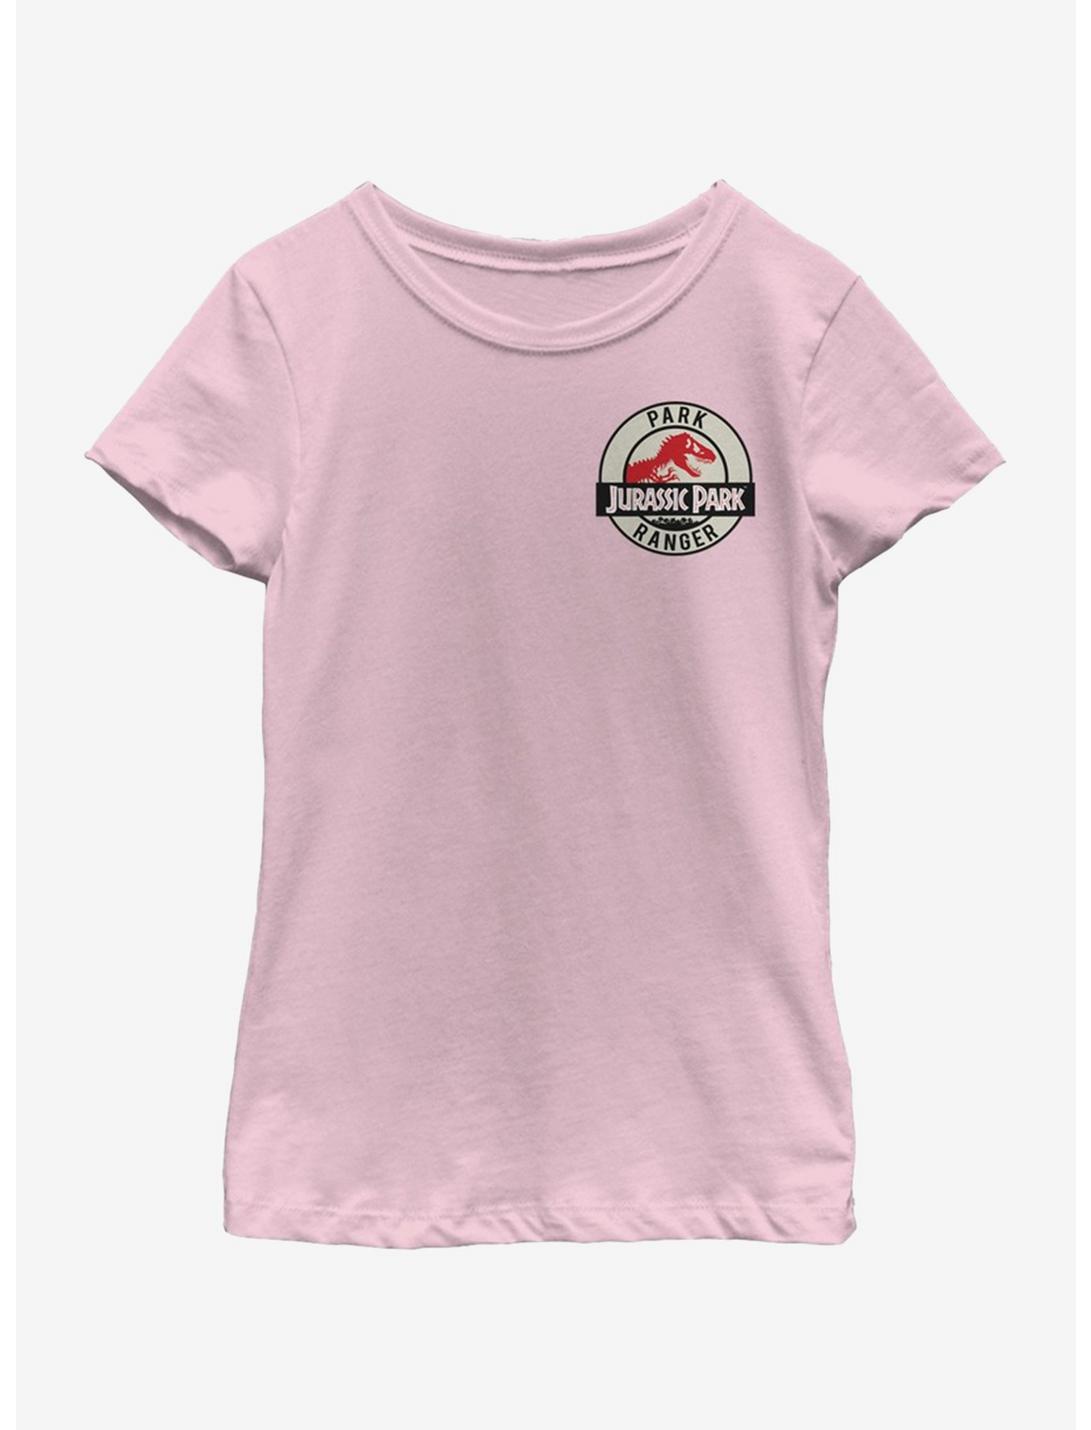 Jurassic Park Park Ranger Tan Badge Youth Girls T-Shirt - PINK | BoxLunch